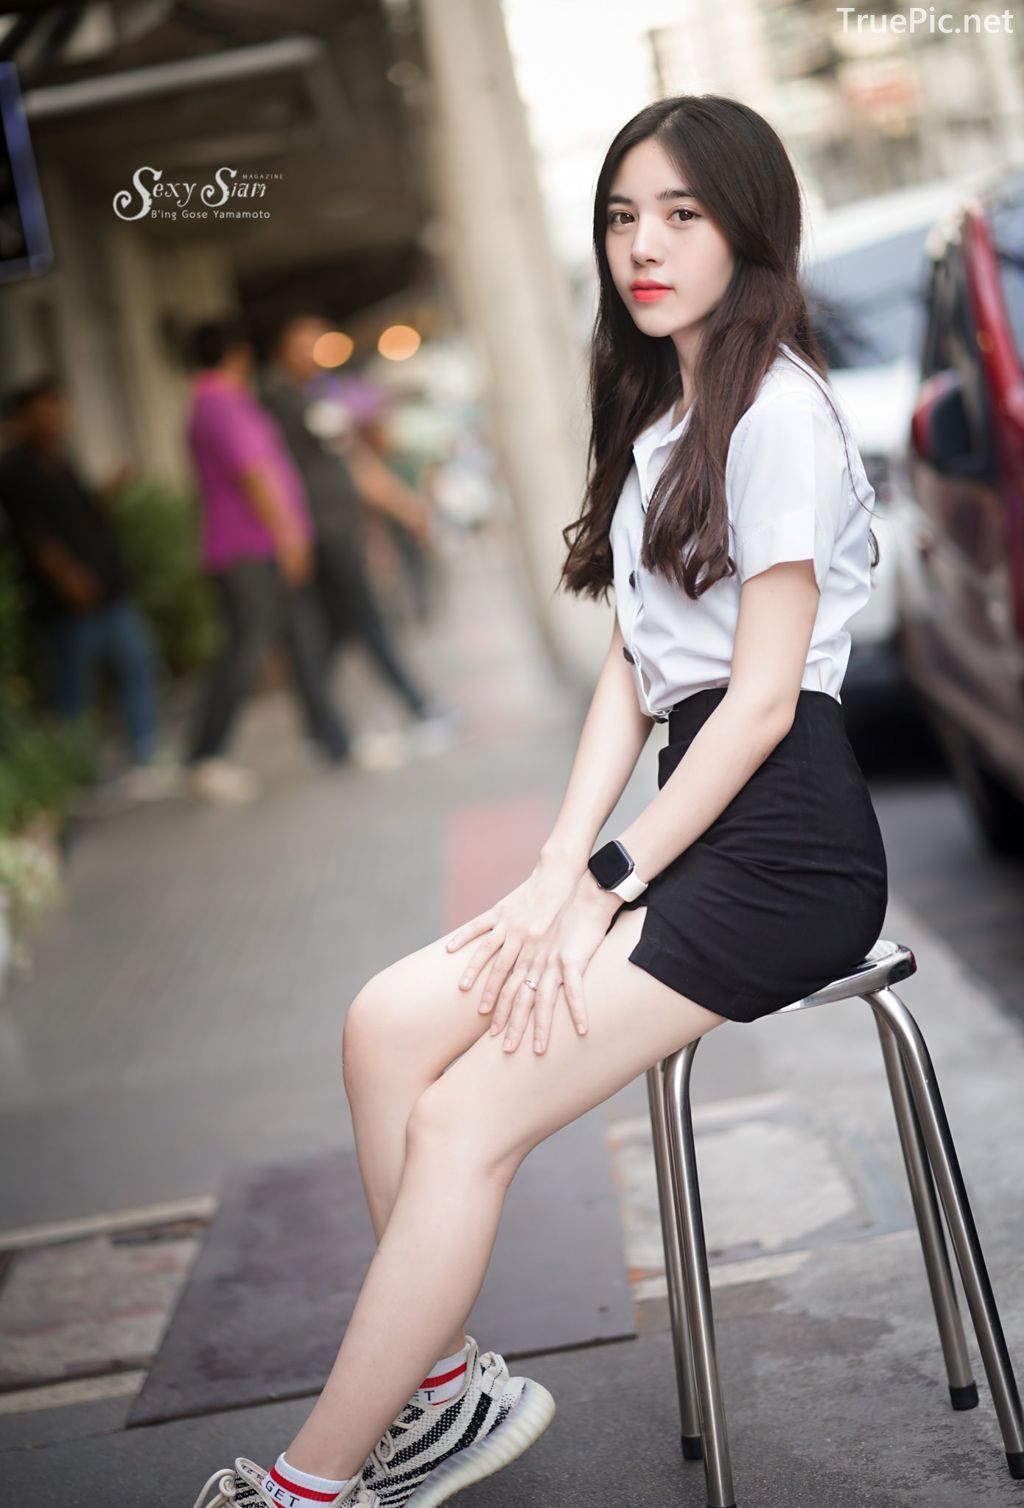 Thailand beautiful girl - Chonticha Chalimewong - Thai Girl Student uniform - TruePic.net - Picture 22